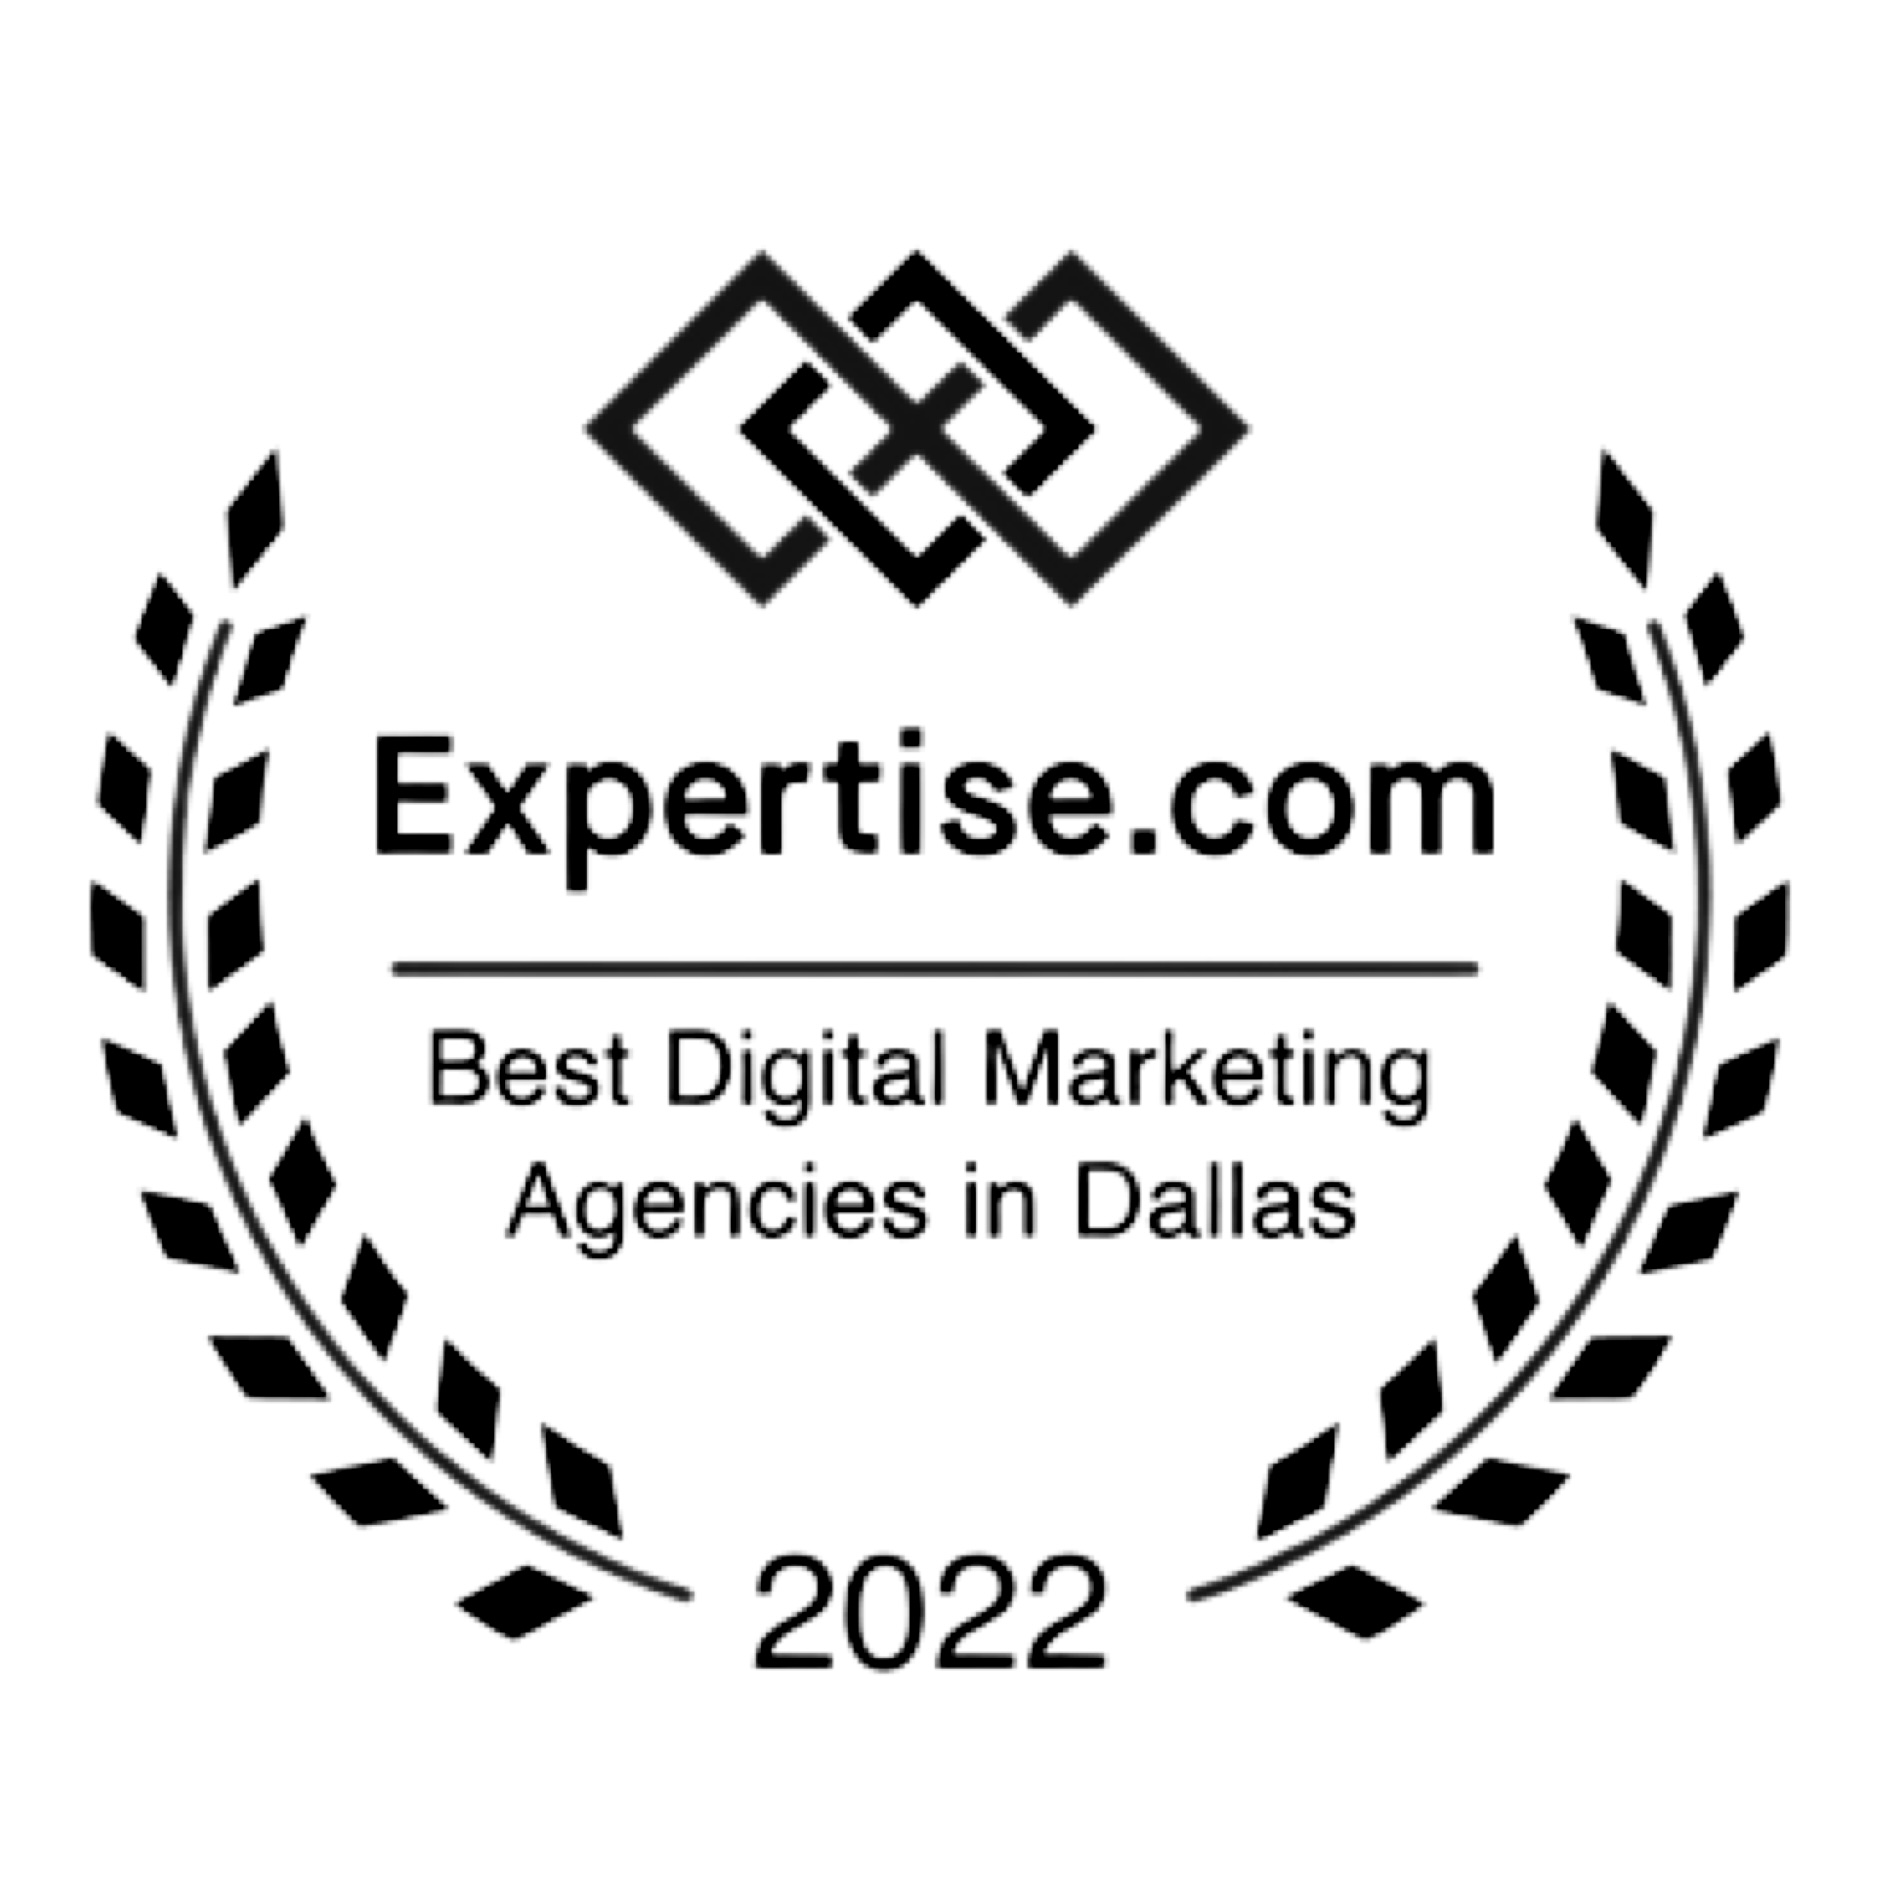 United States Altered State Productions, Best Digital Marketing Agencies in Dallas - Expertise.,9’ ödülünü kazandı